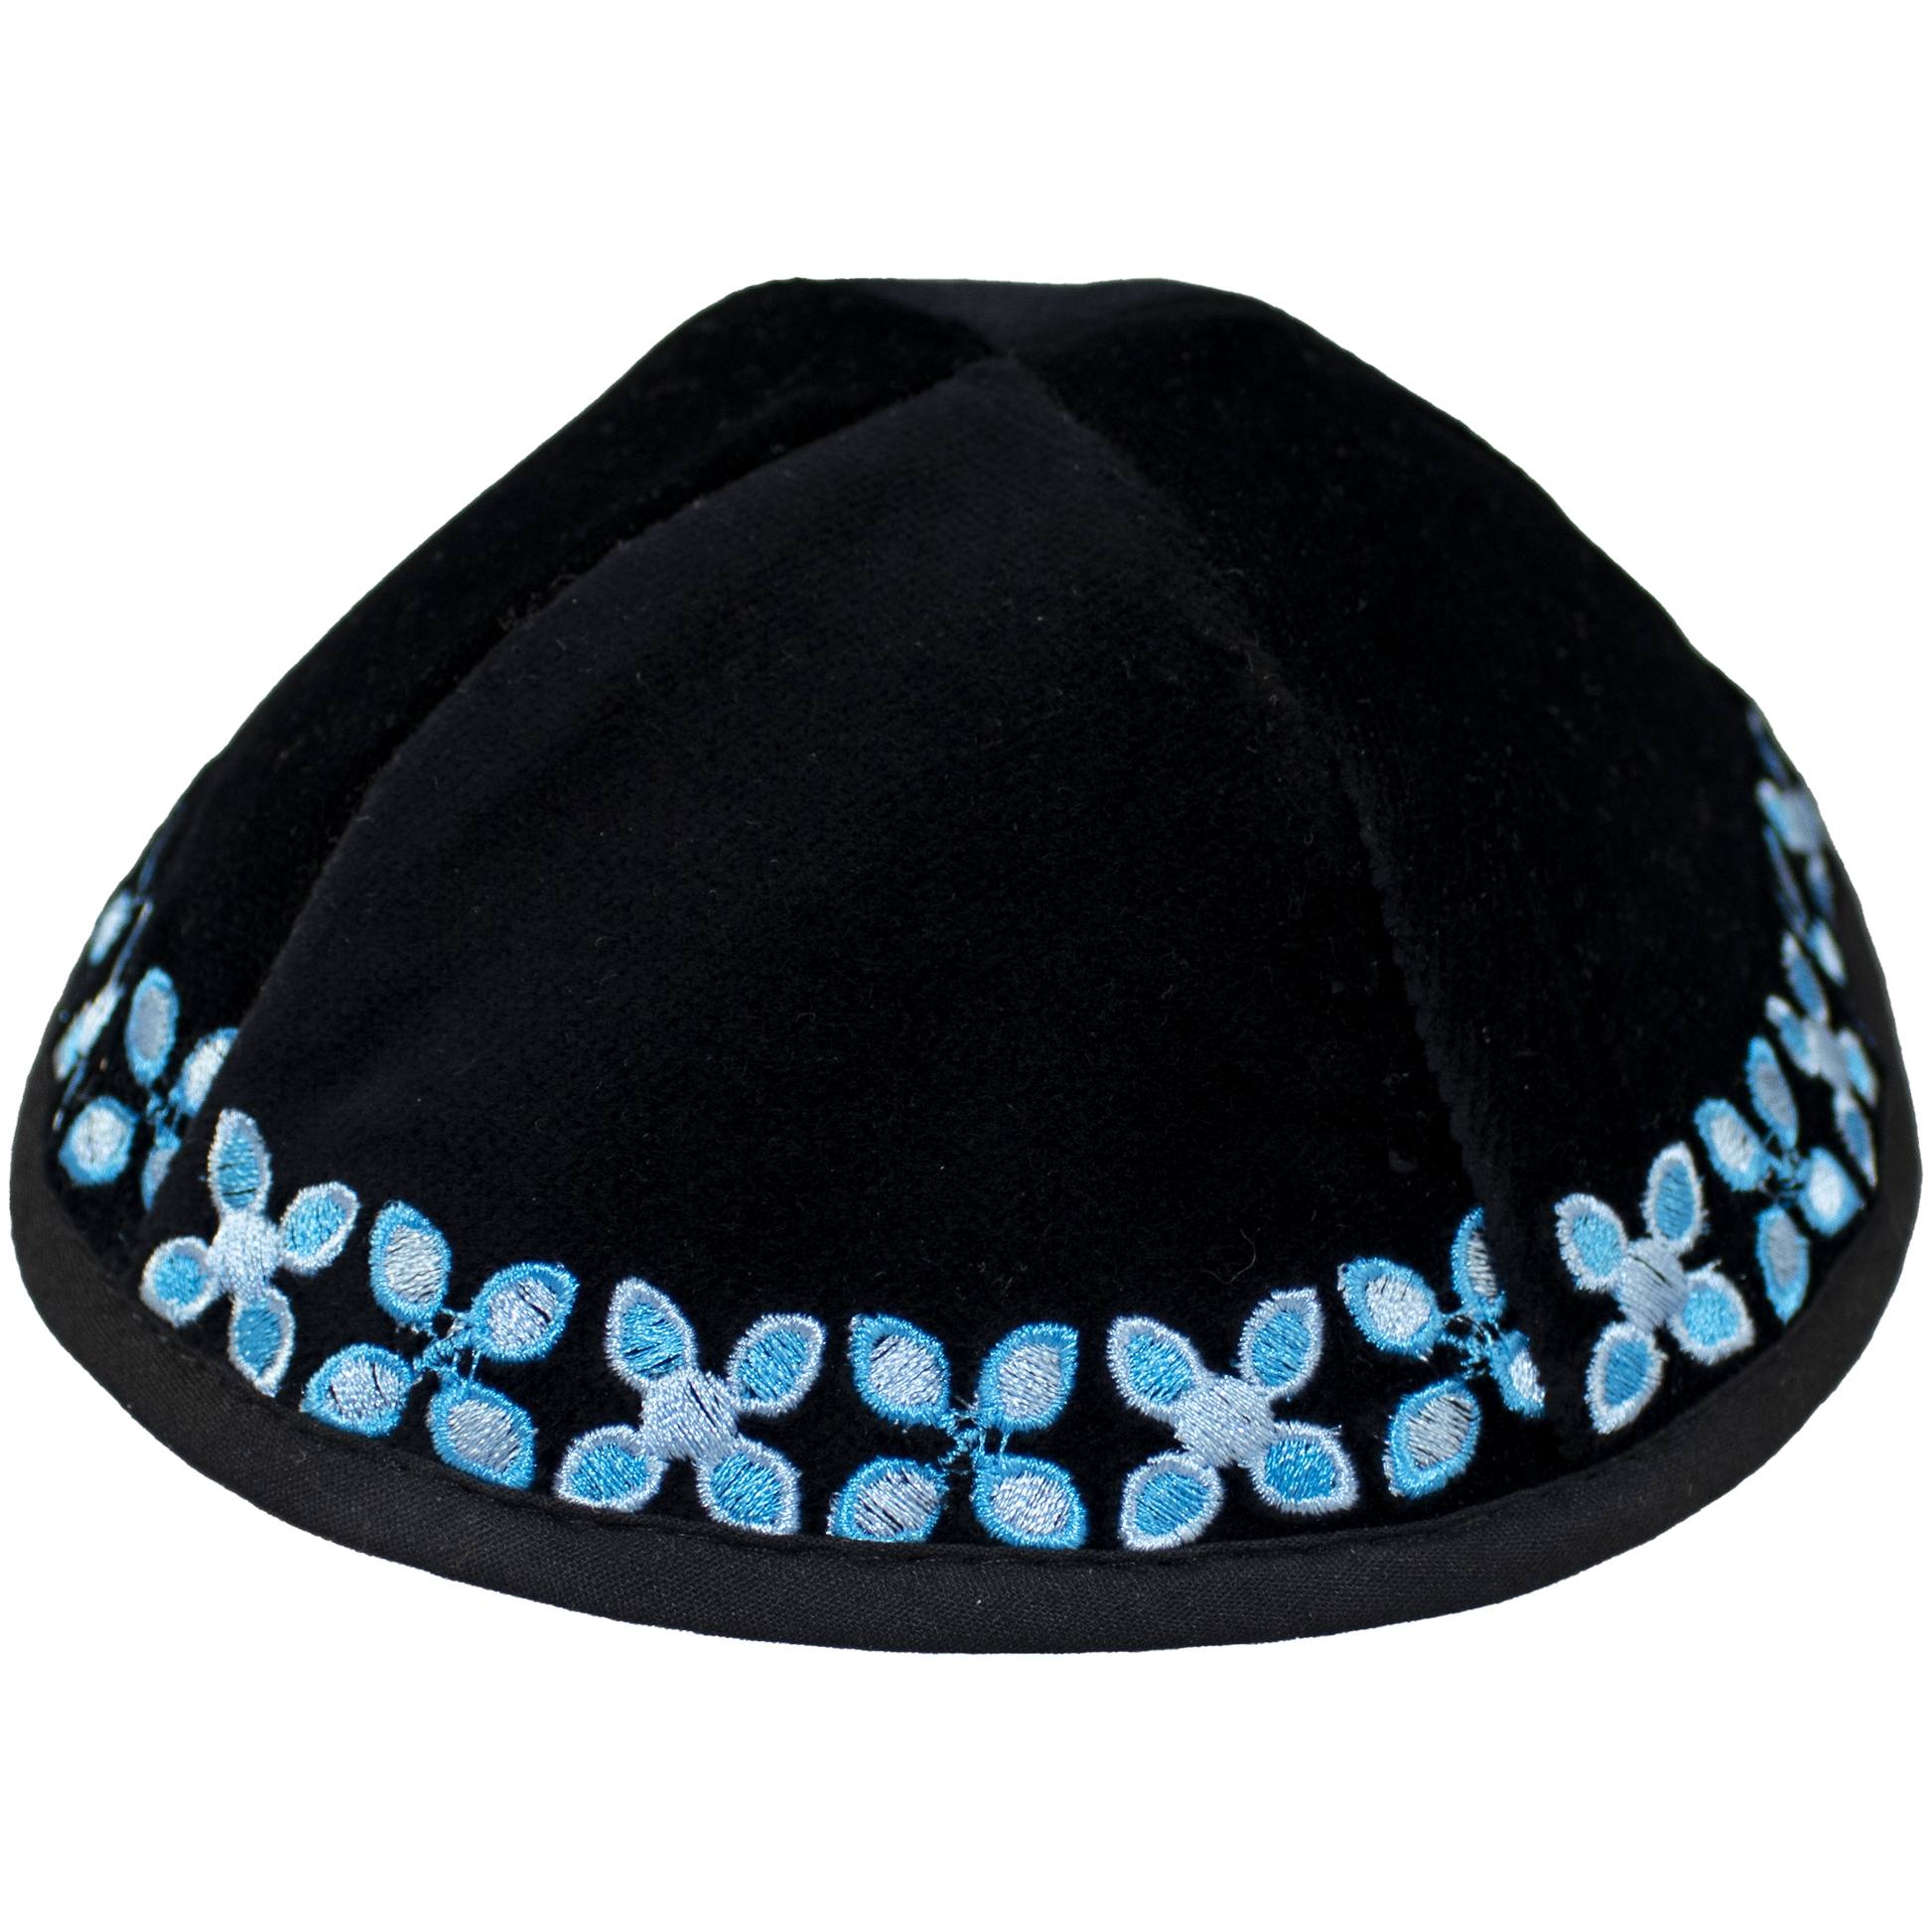 Black Velvet Kippah with dual toned blue 4 petal floral pattern circumferencing the bottom edge